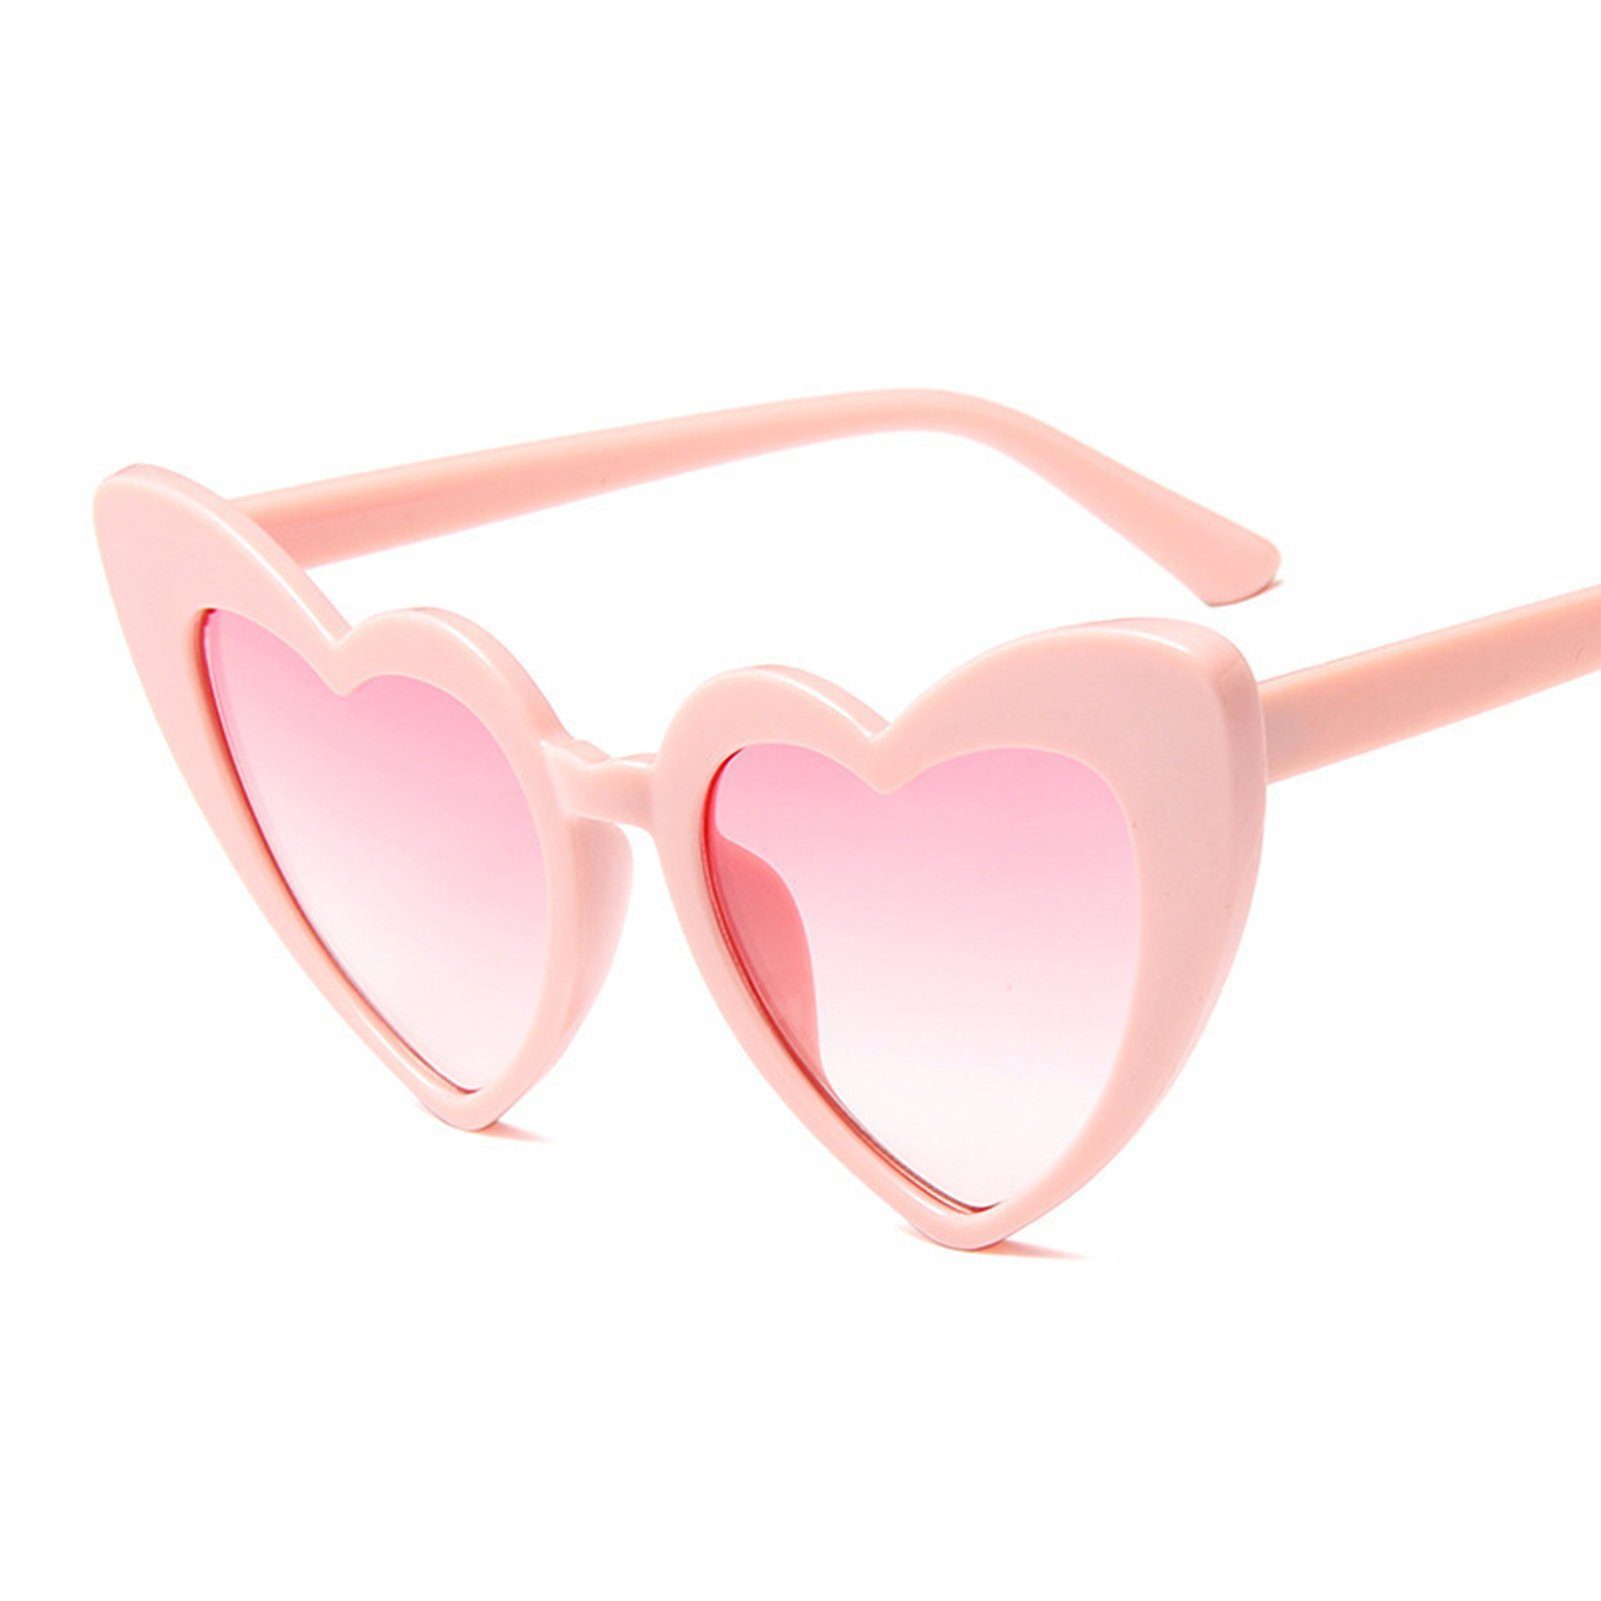 Blusmart Retrosonnenbrille Damen-Sonnenbrille In Herzform, Vintage-Stil, Blendfrei pink a